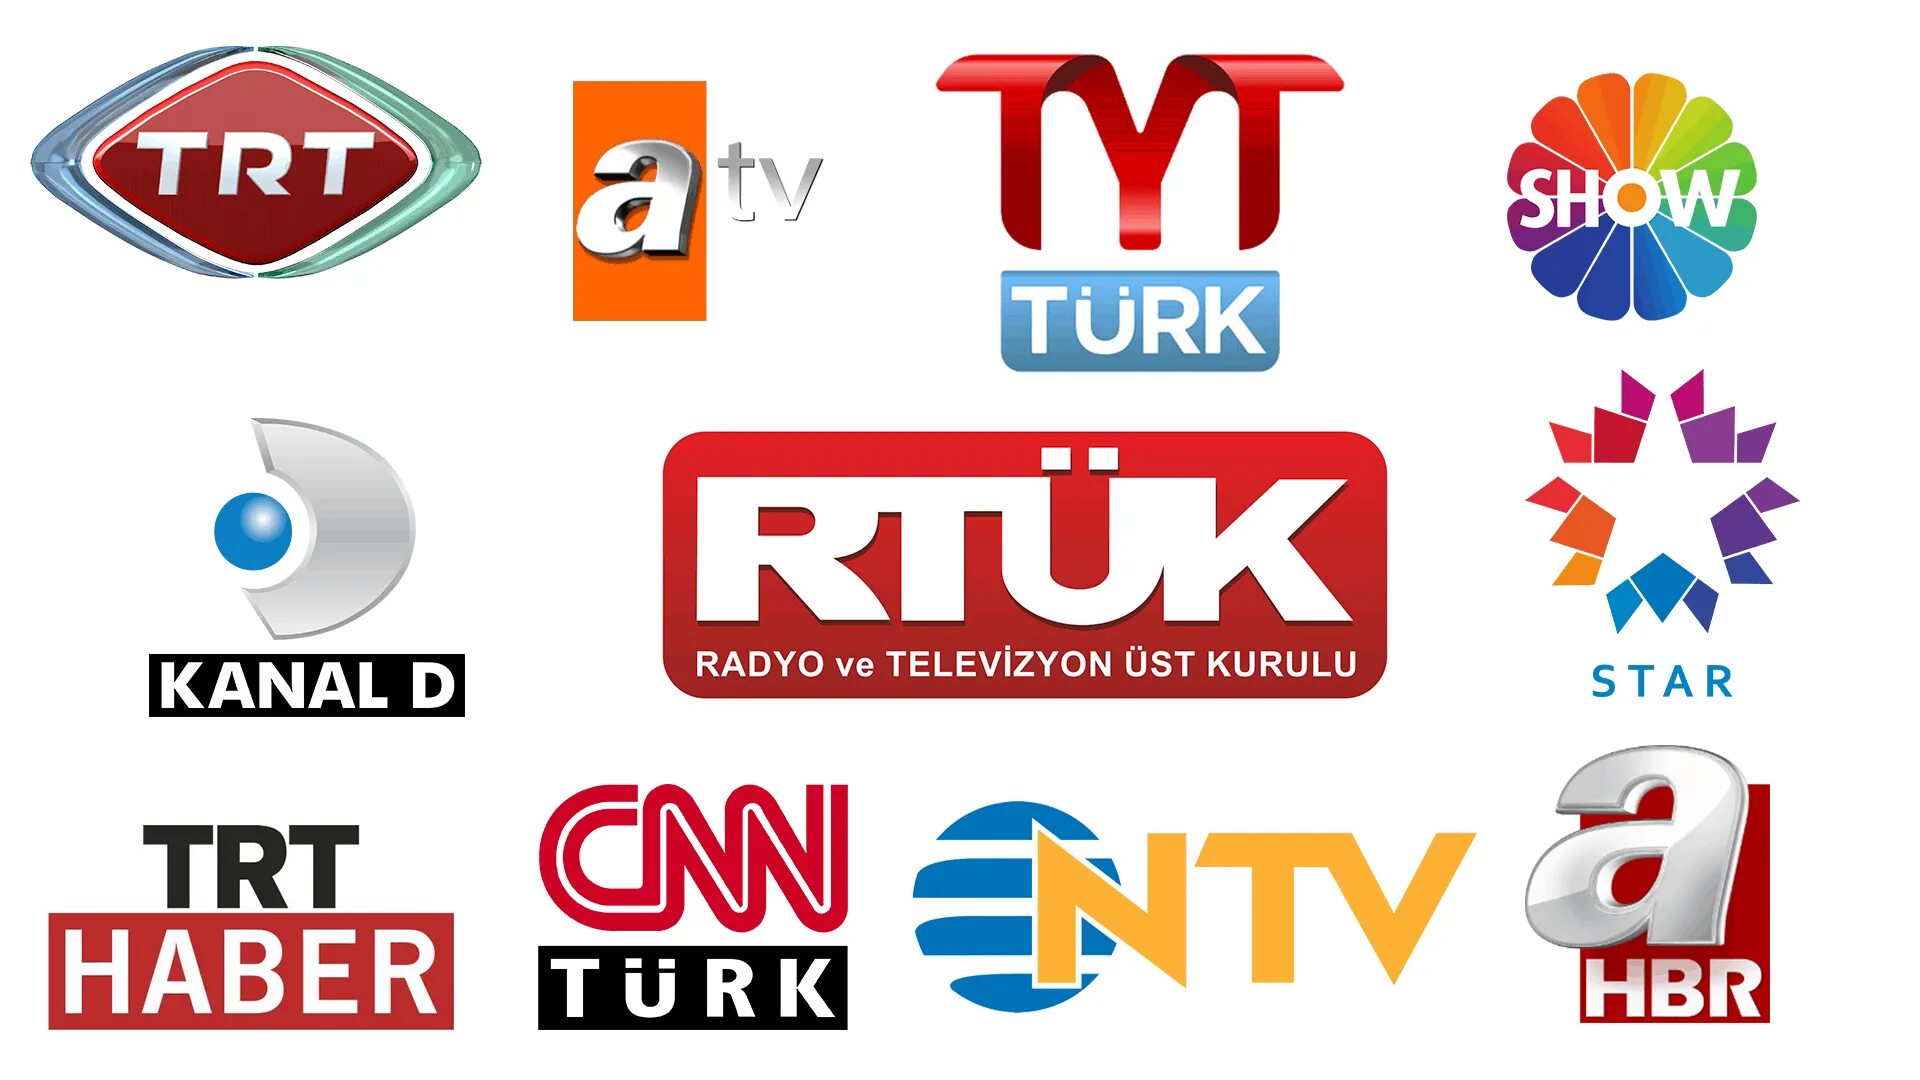 Tv atv canli yayin. Atv что это такое в телевизоре. Atv (Турция). Телевизоры каналлари. Kanallari.